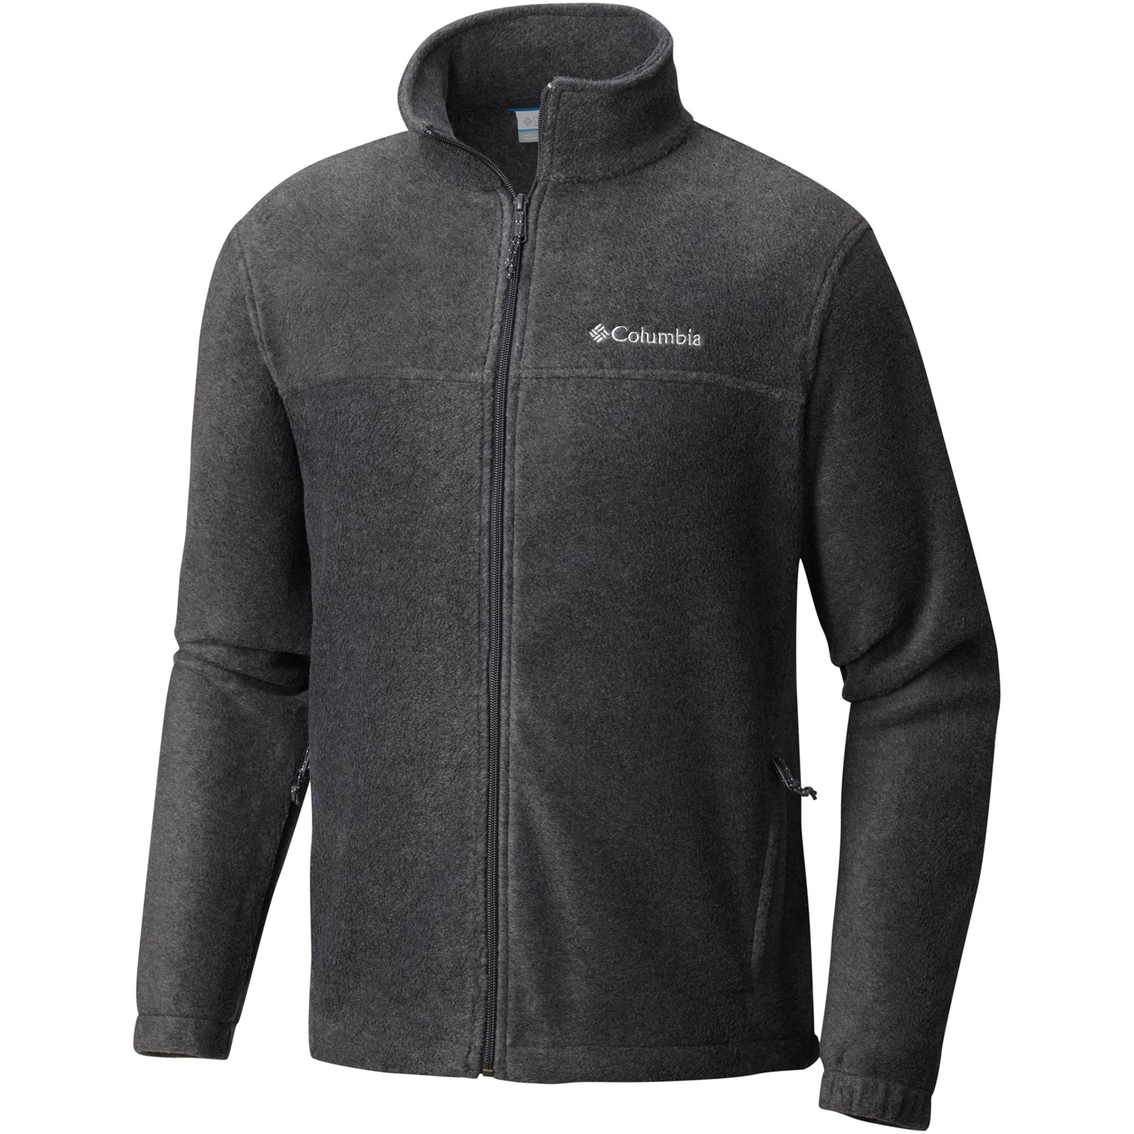 Columbia Steens Mountain Full Zip Fleece Jacket | Jackets | Clothing ...